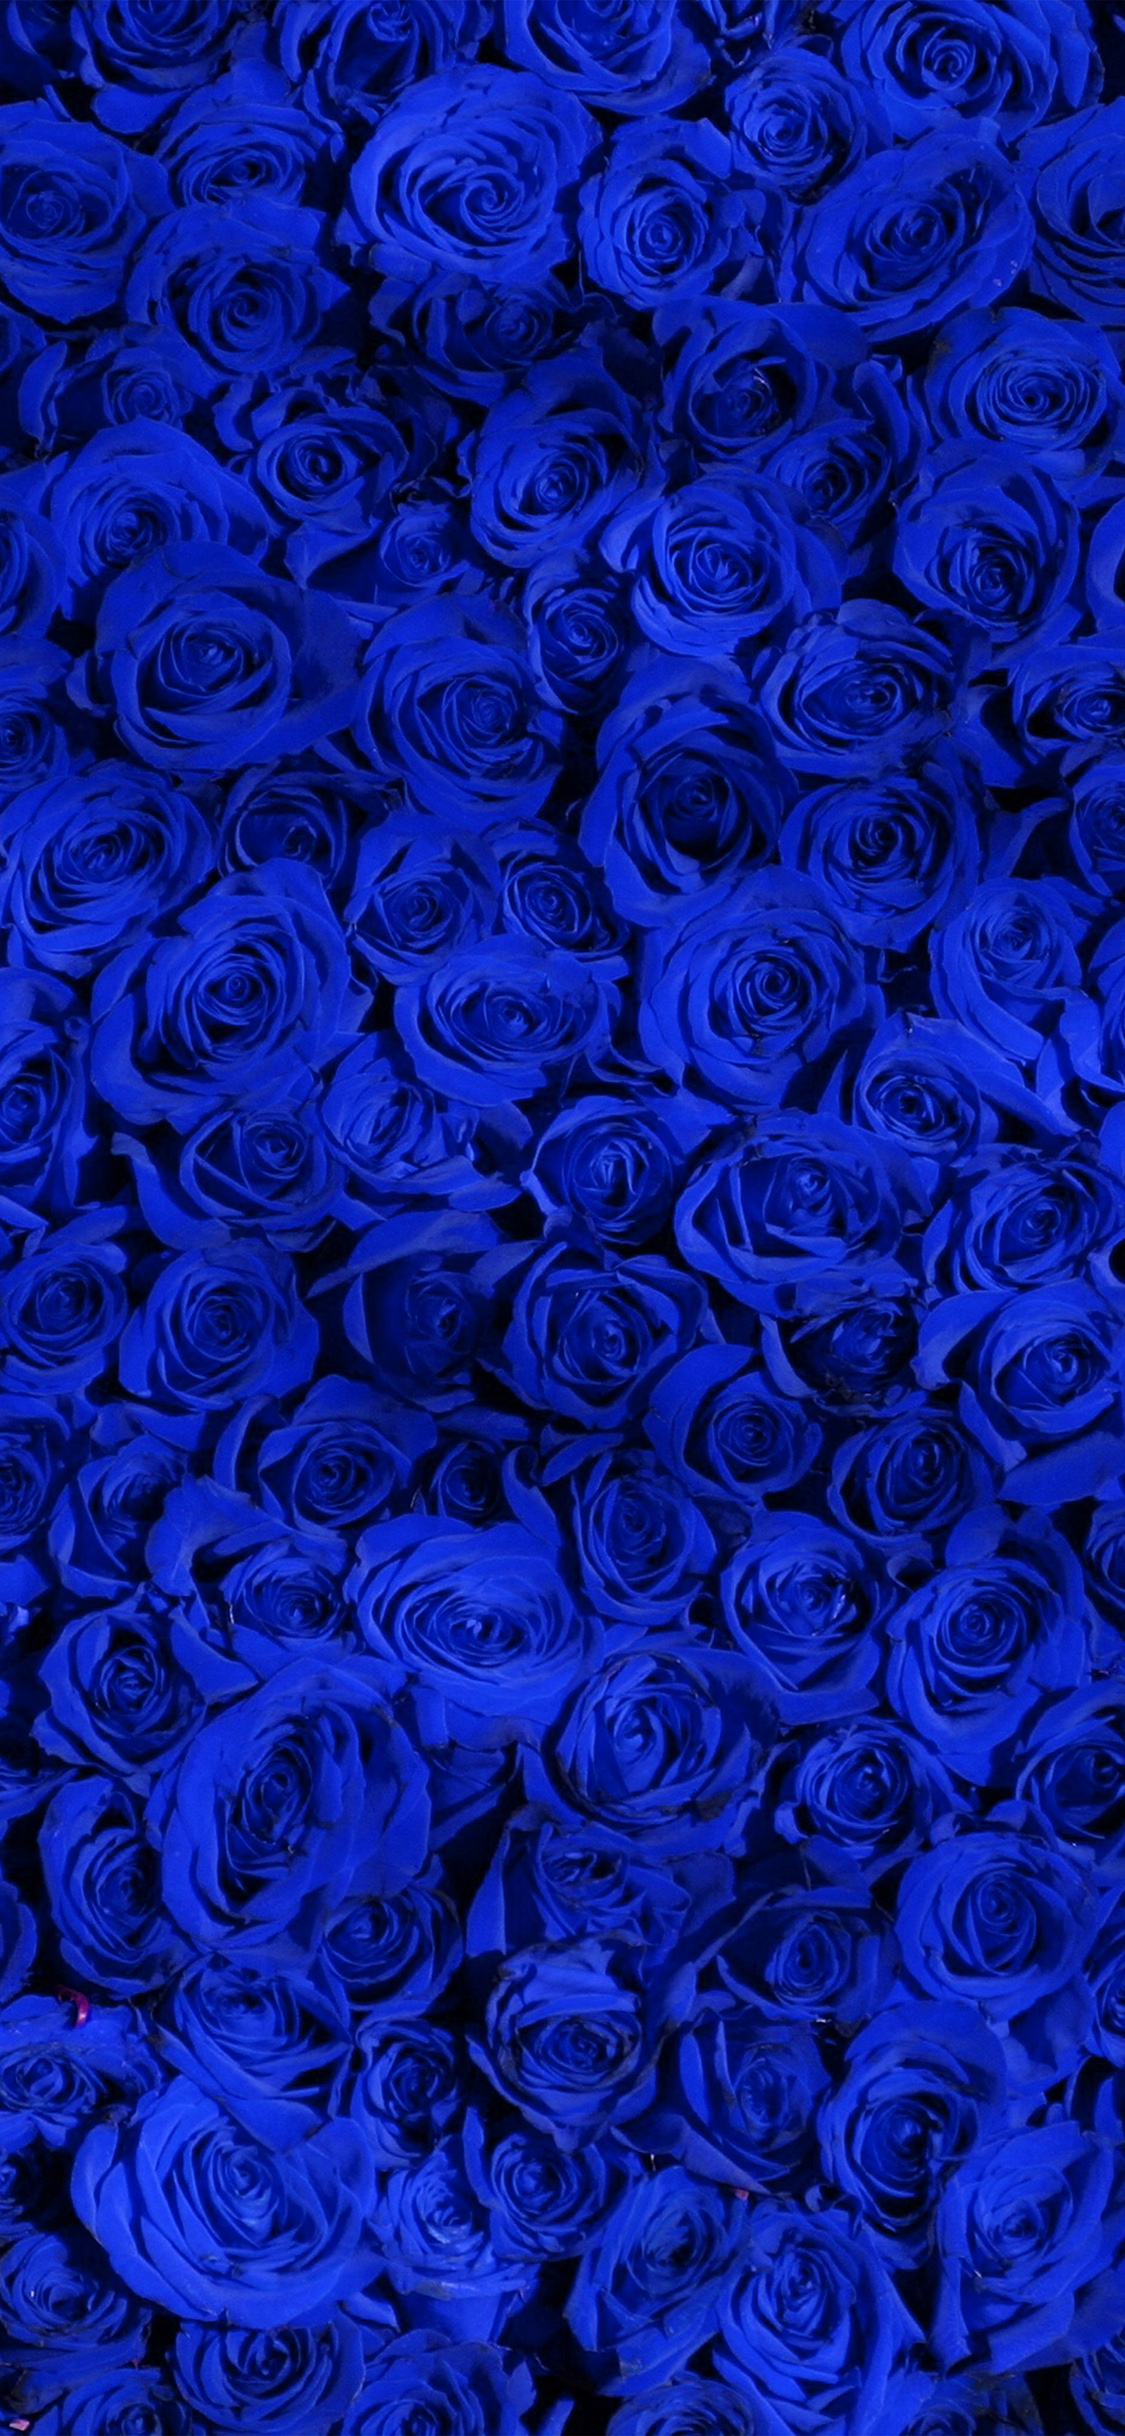 iPhone 8 wallpaper. rose blue pattern